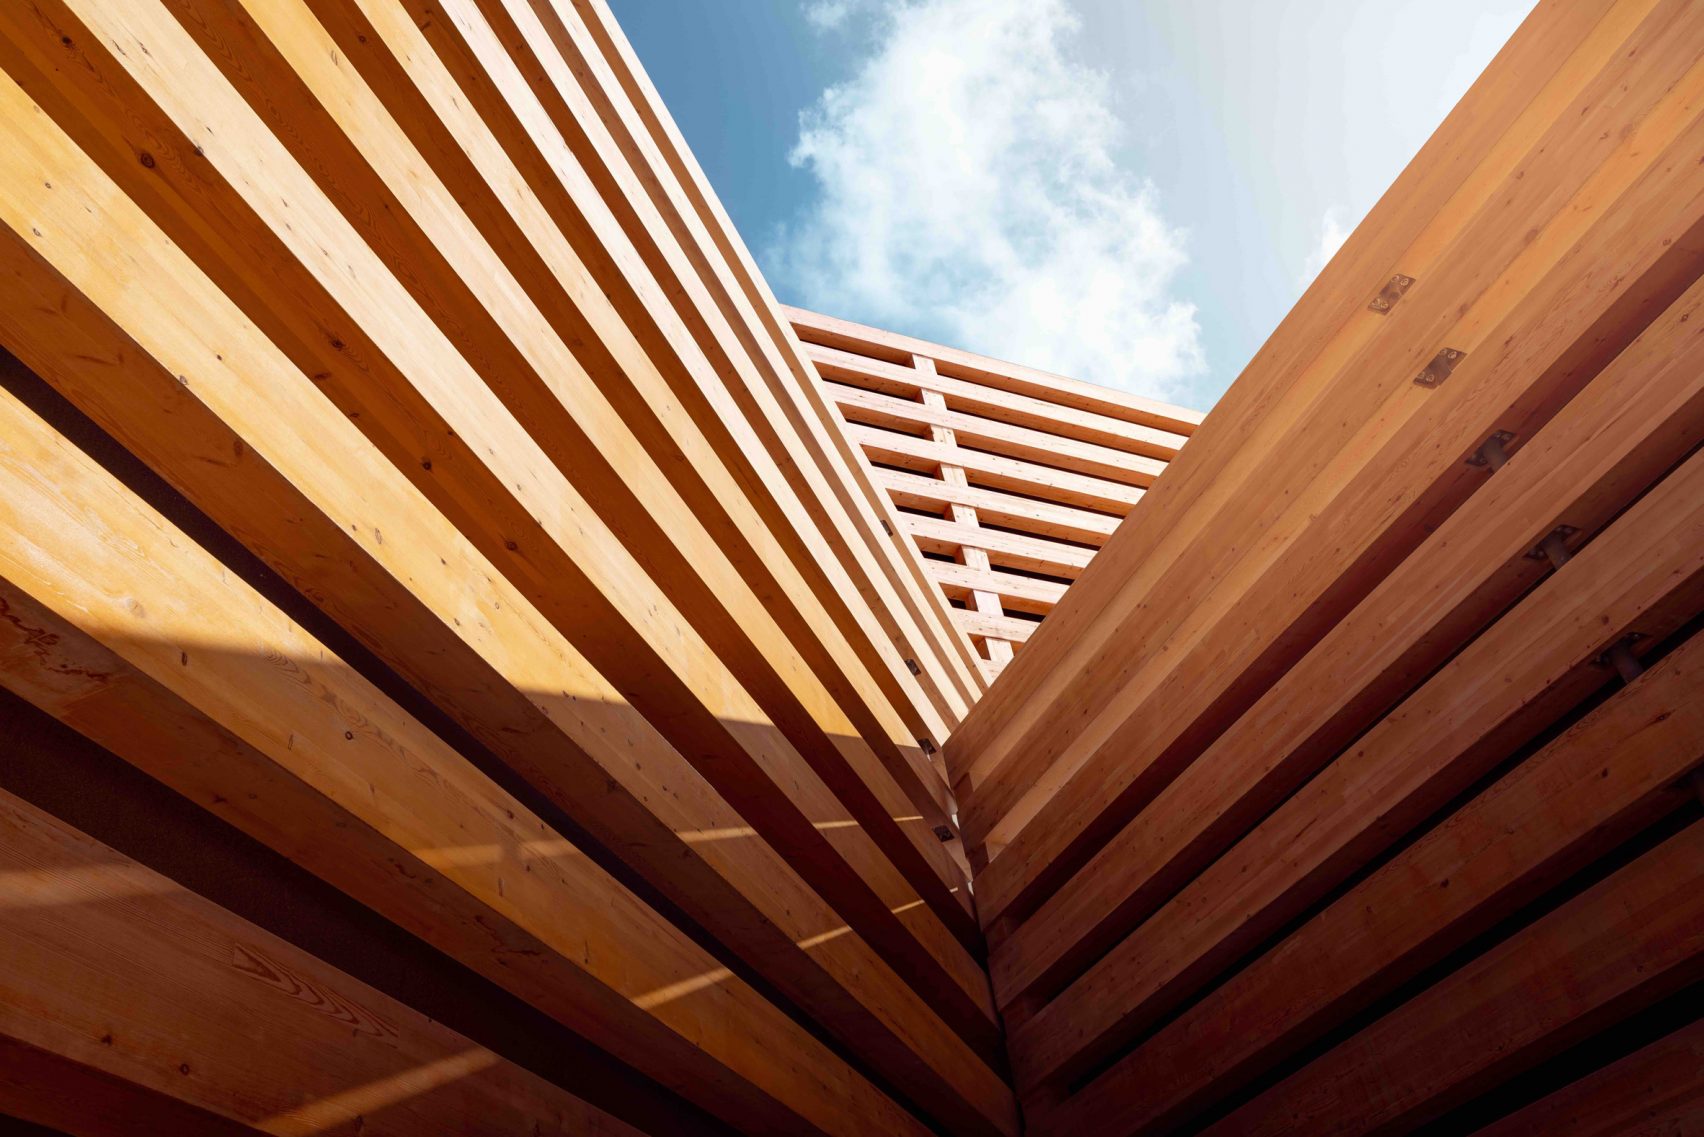 Kengo Kuma S Stacked Timber Odunpazari Modern Museum Opens